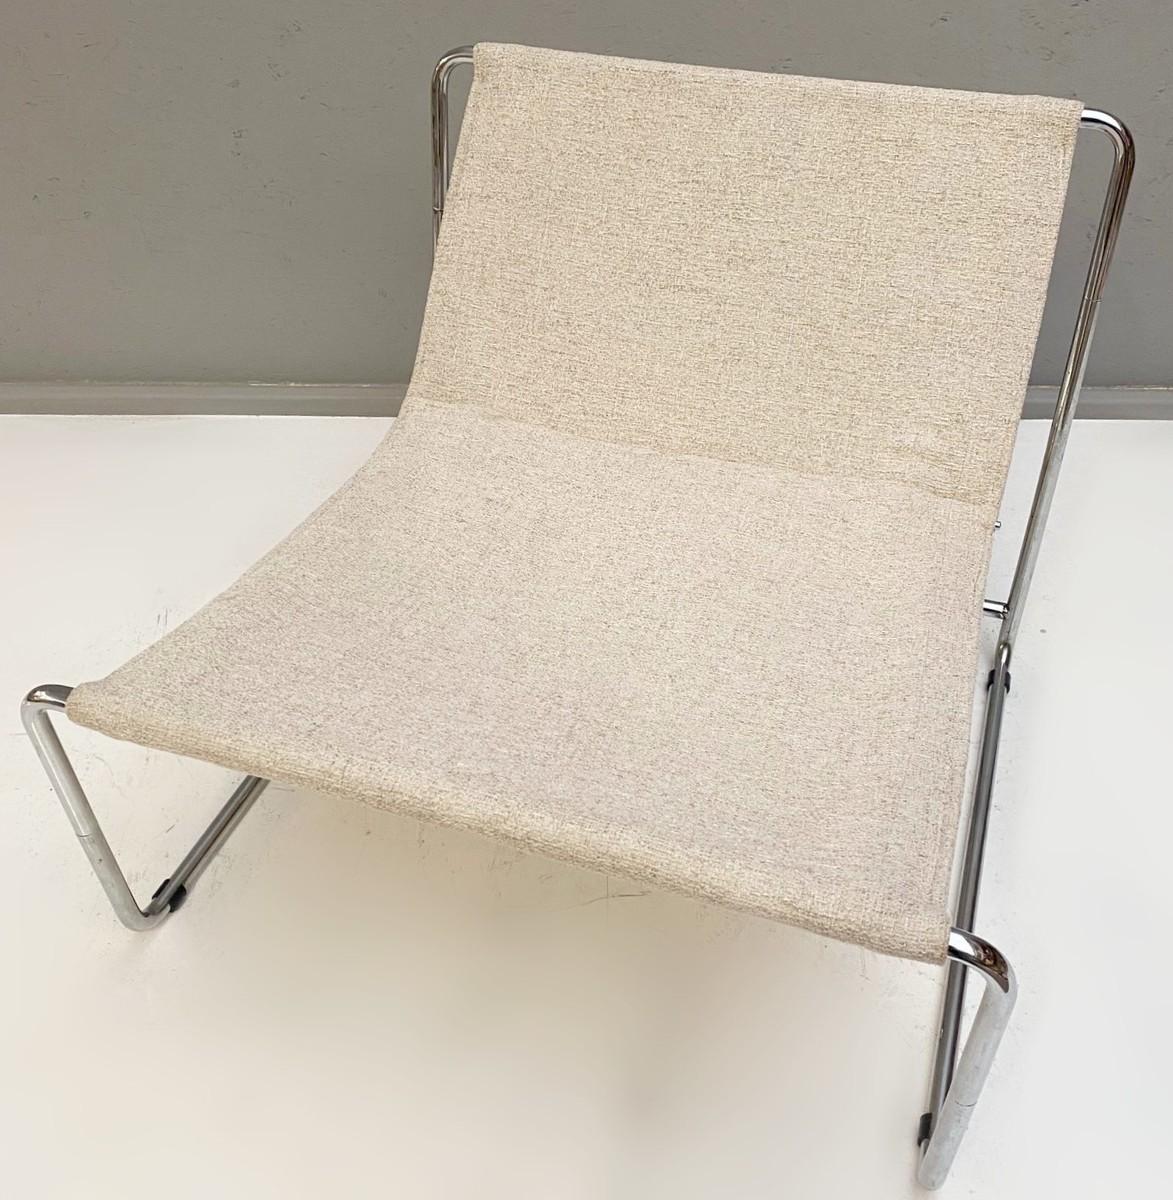 Mid-Century Modern Lounge Chair 